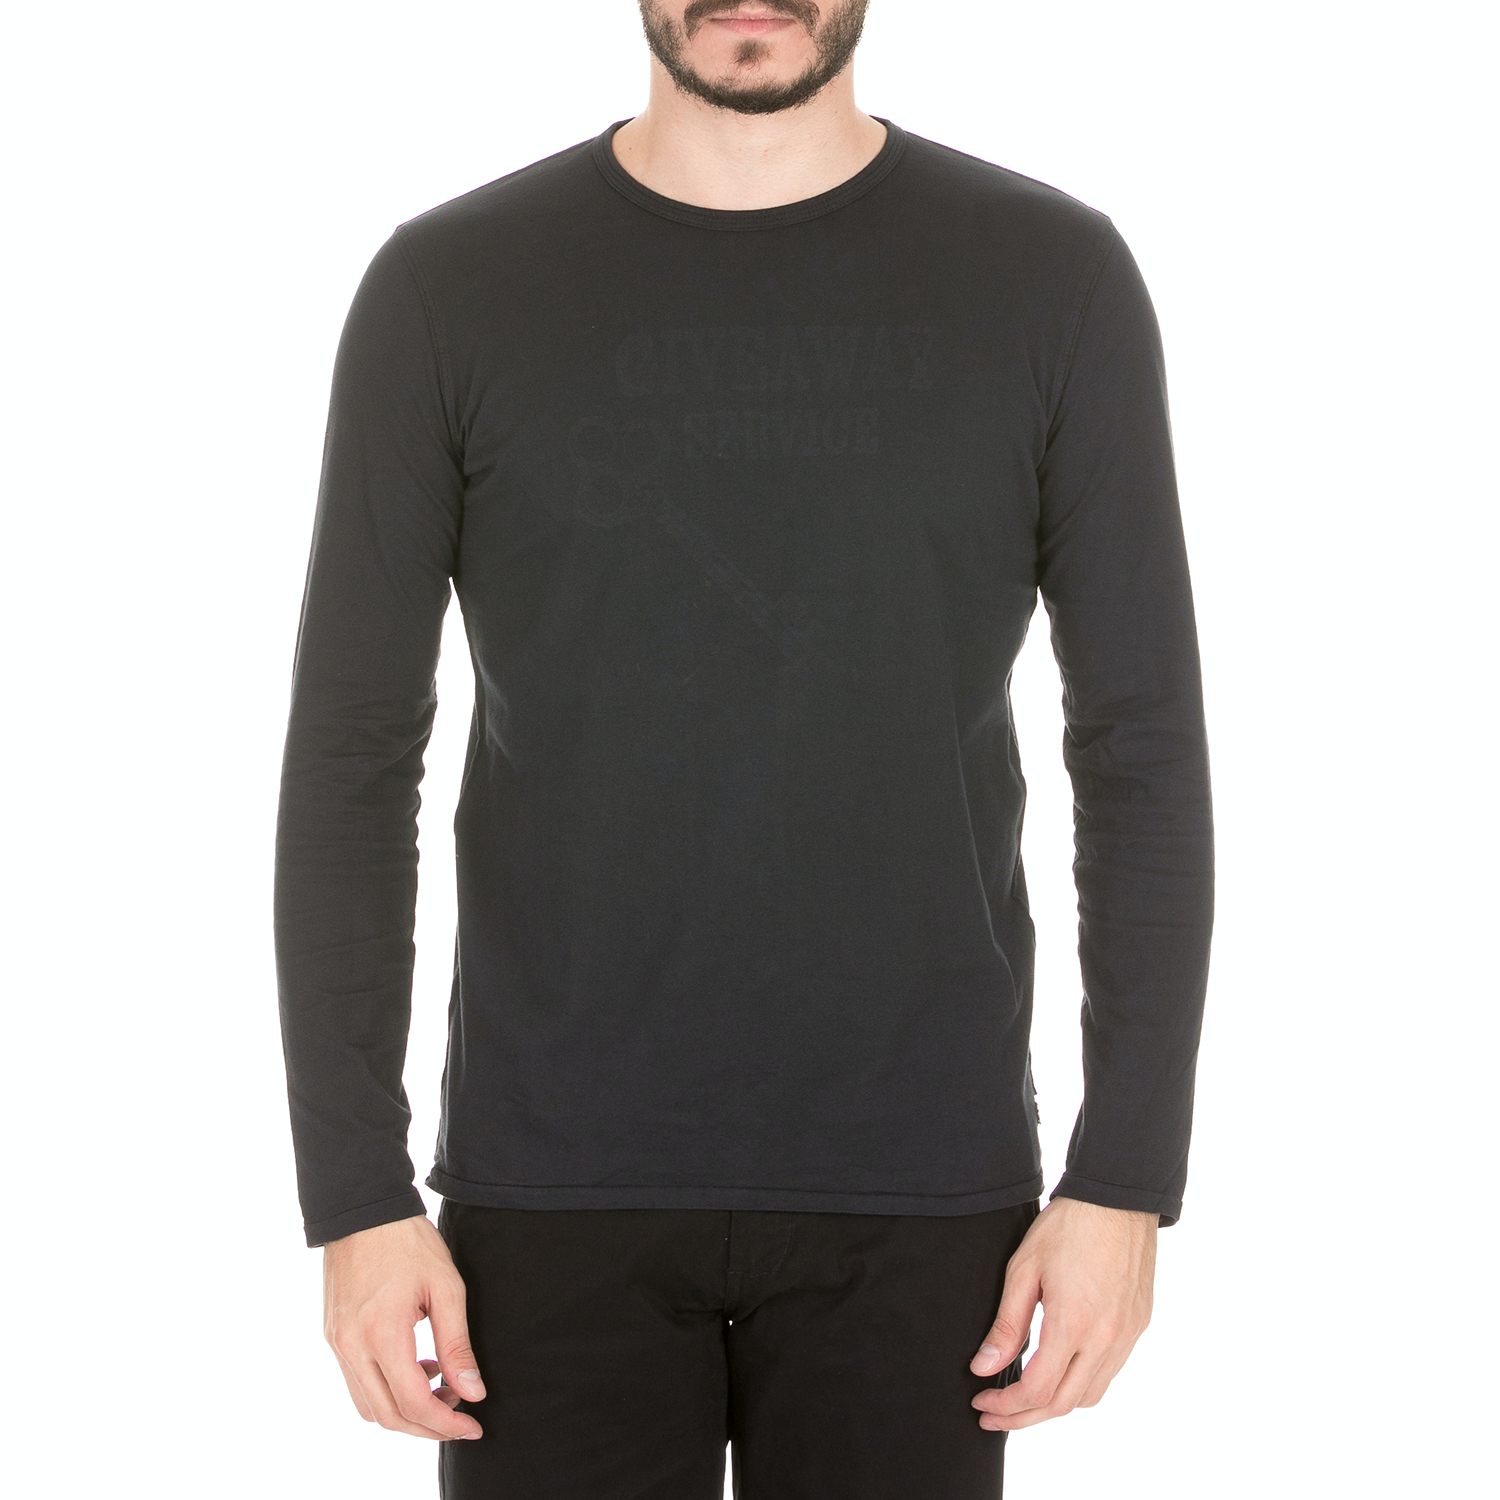 GREENWOOD - Ανδρική μπλούζα GREENWOOD μαύρη Ανδρικά/Ρούχα/Μπλούζες/Μακρυμάνικες